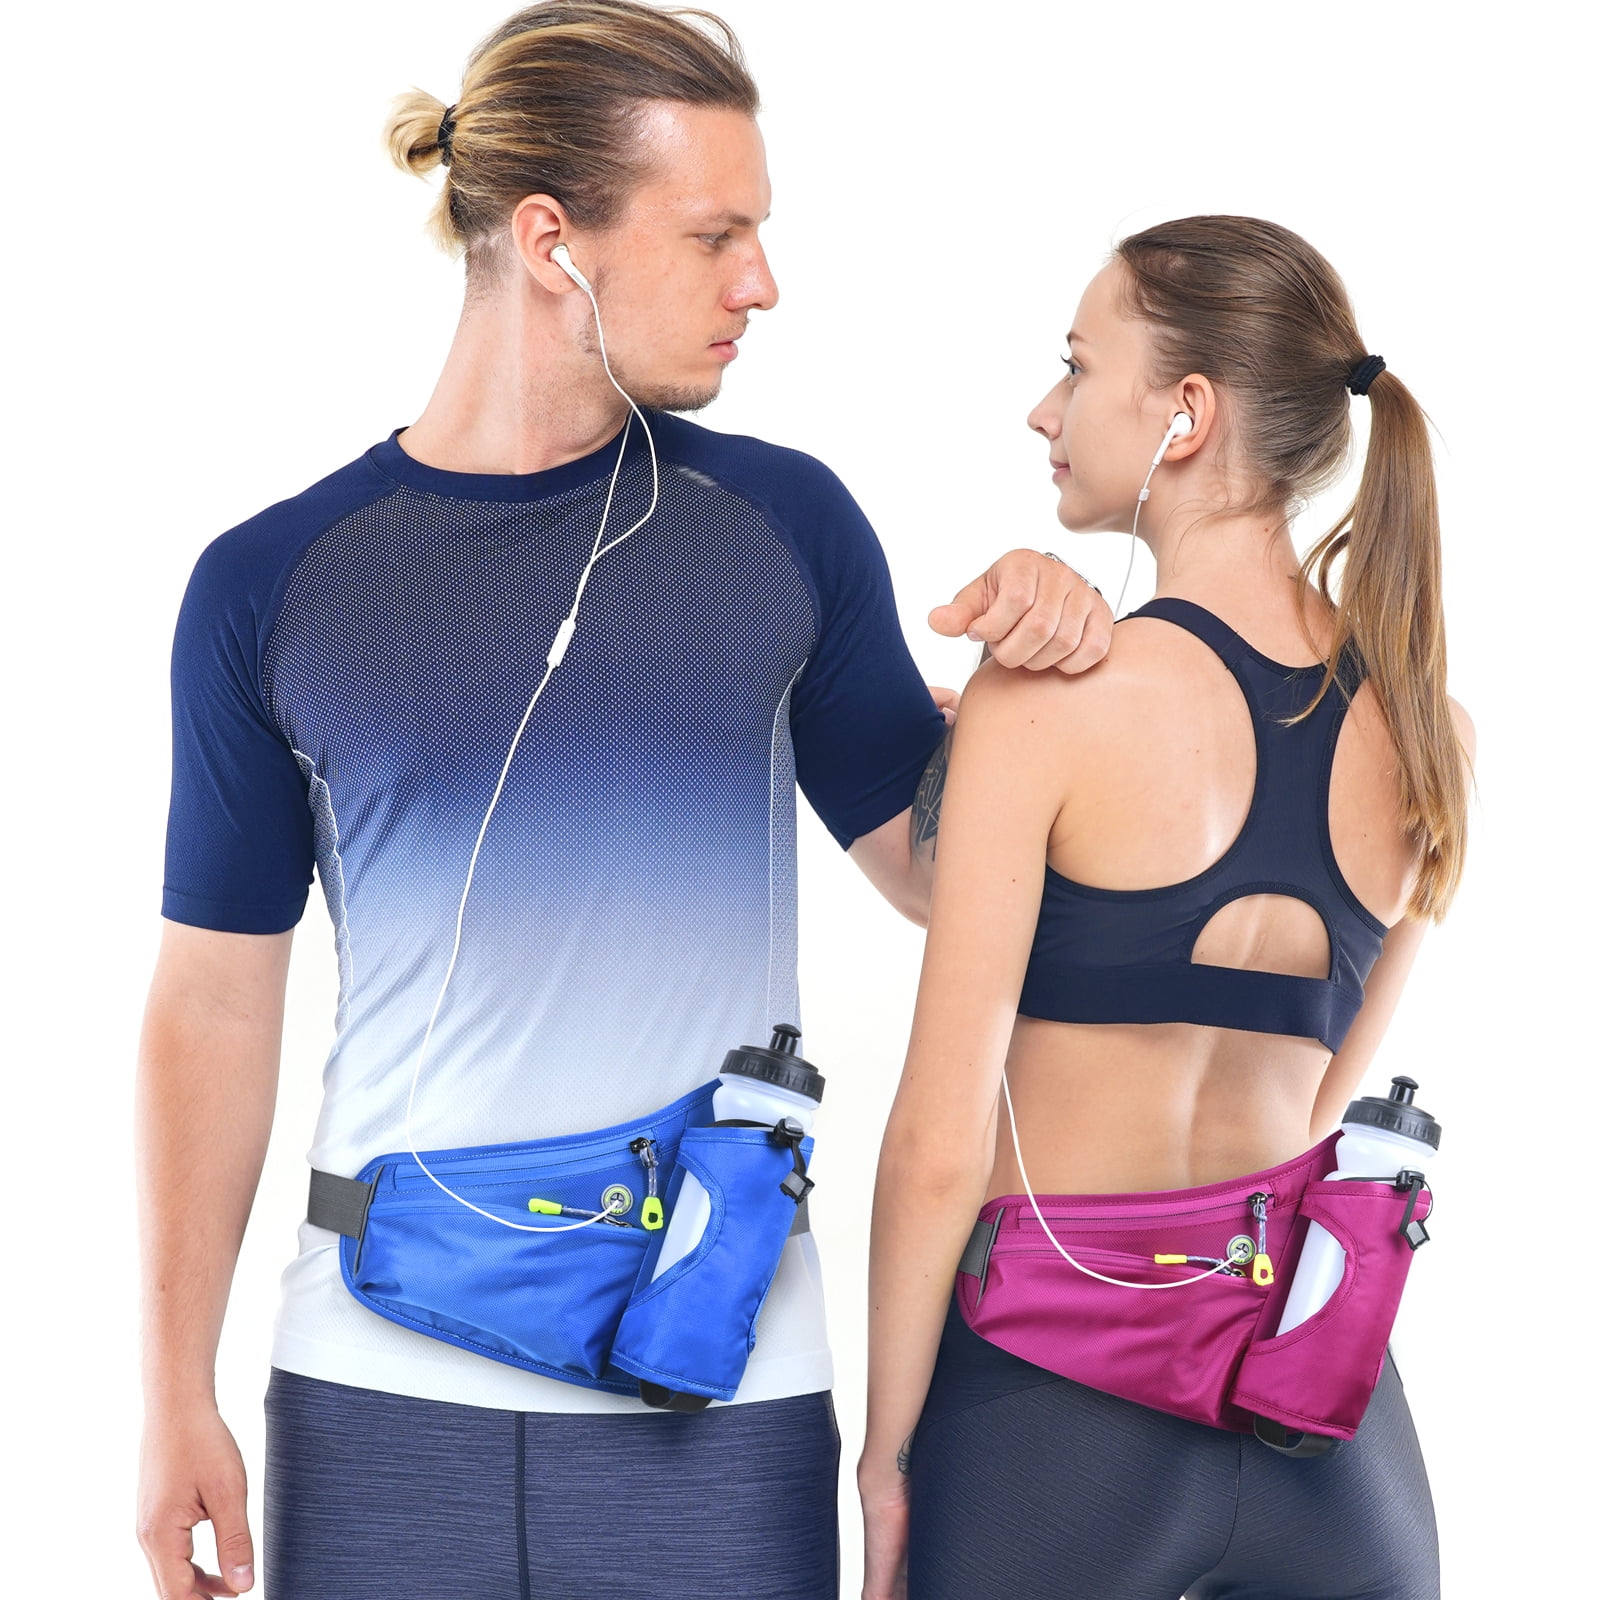 Haissky Running Belt Bum Bag with Water Bottle Holder and Earphone Hole Waterproof Waist Bag Cycling Dog Walking Marathon Hiking 